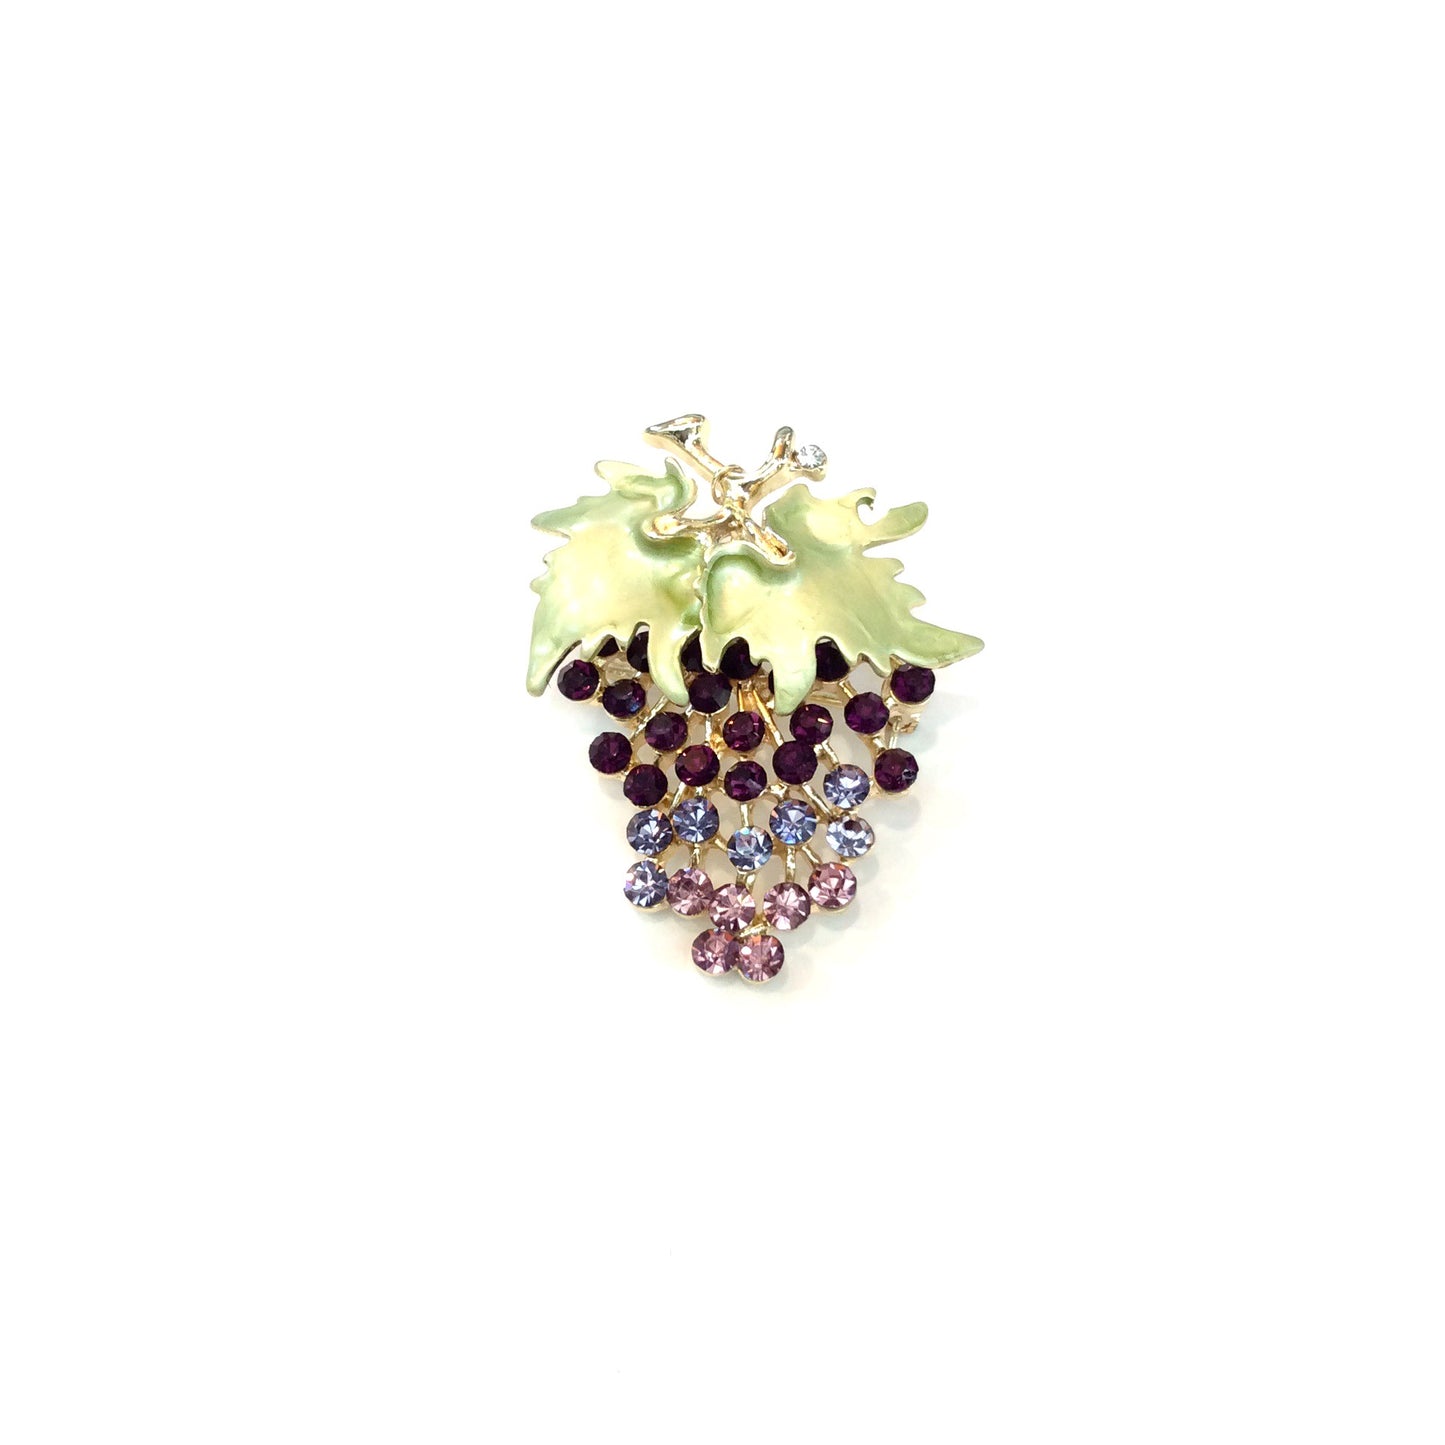 Grape Pin #38-2692